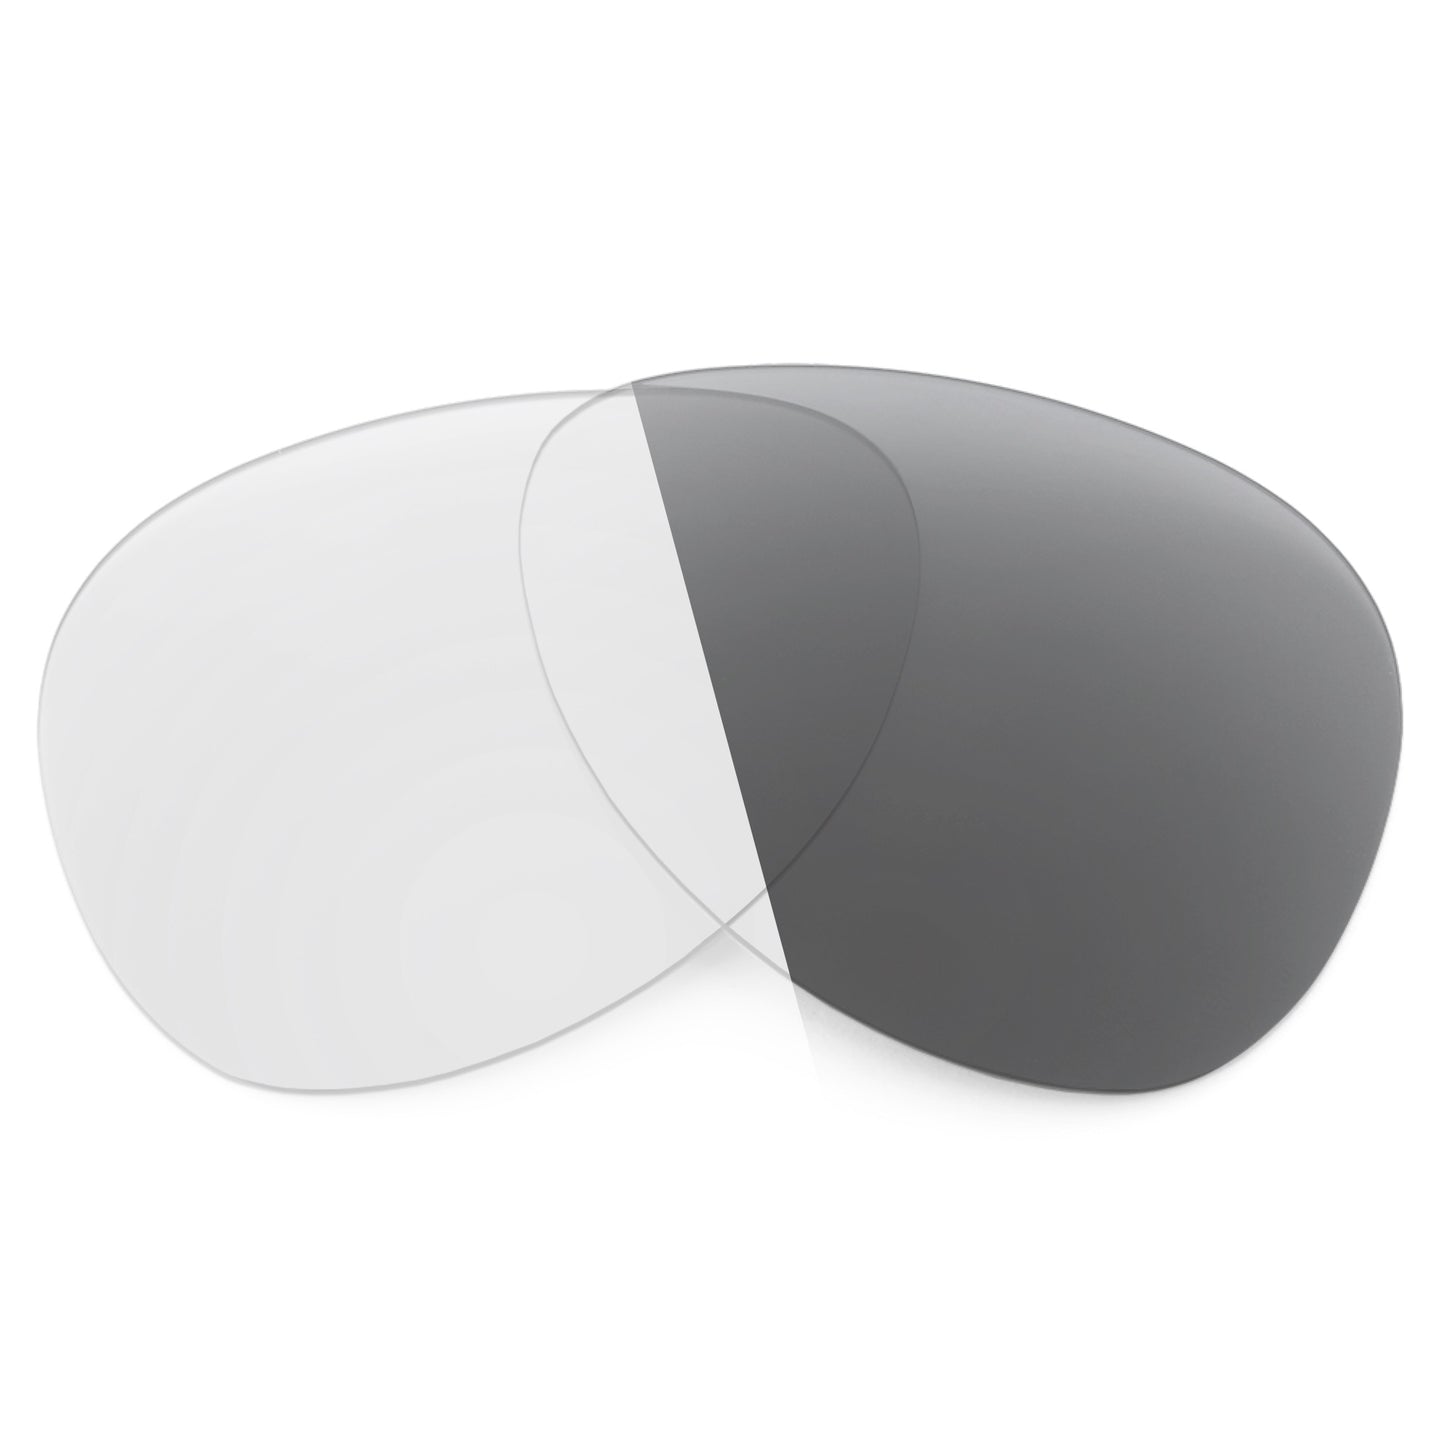 Revant replacement lenses for Oakley Crosshair Ti (61mm) Non-Polarized Adapt Gray Photochromic